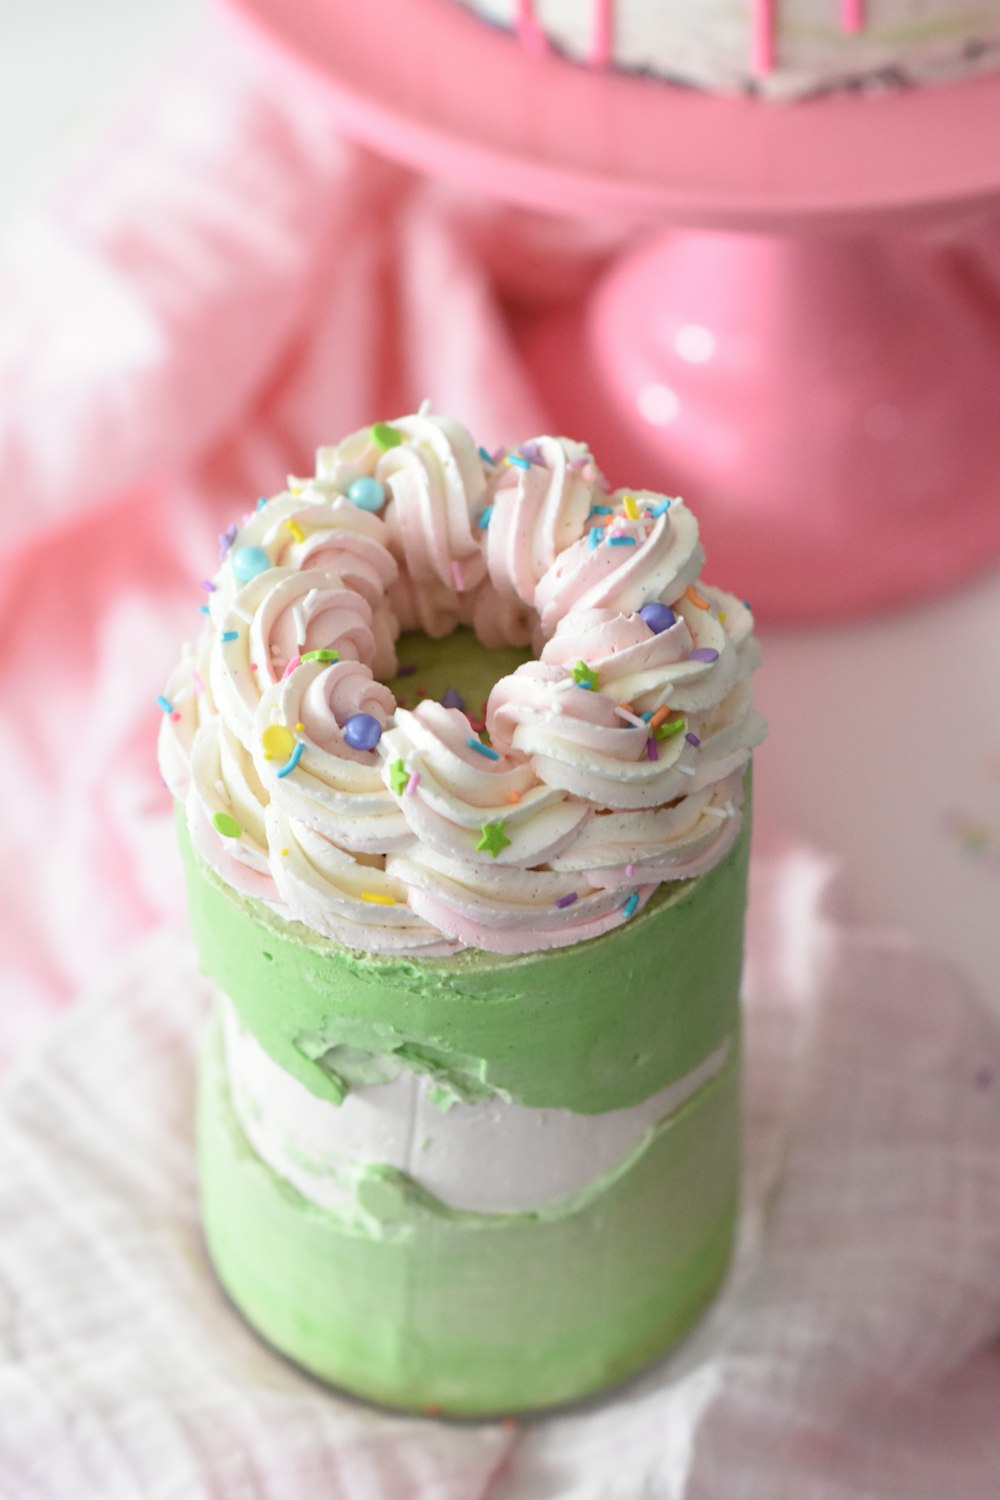 shallow focus photo of green cupcake